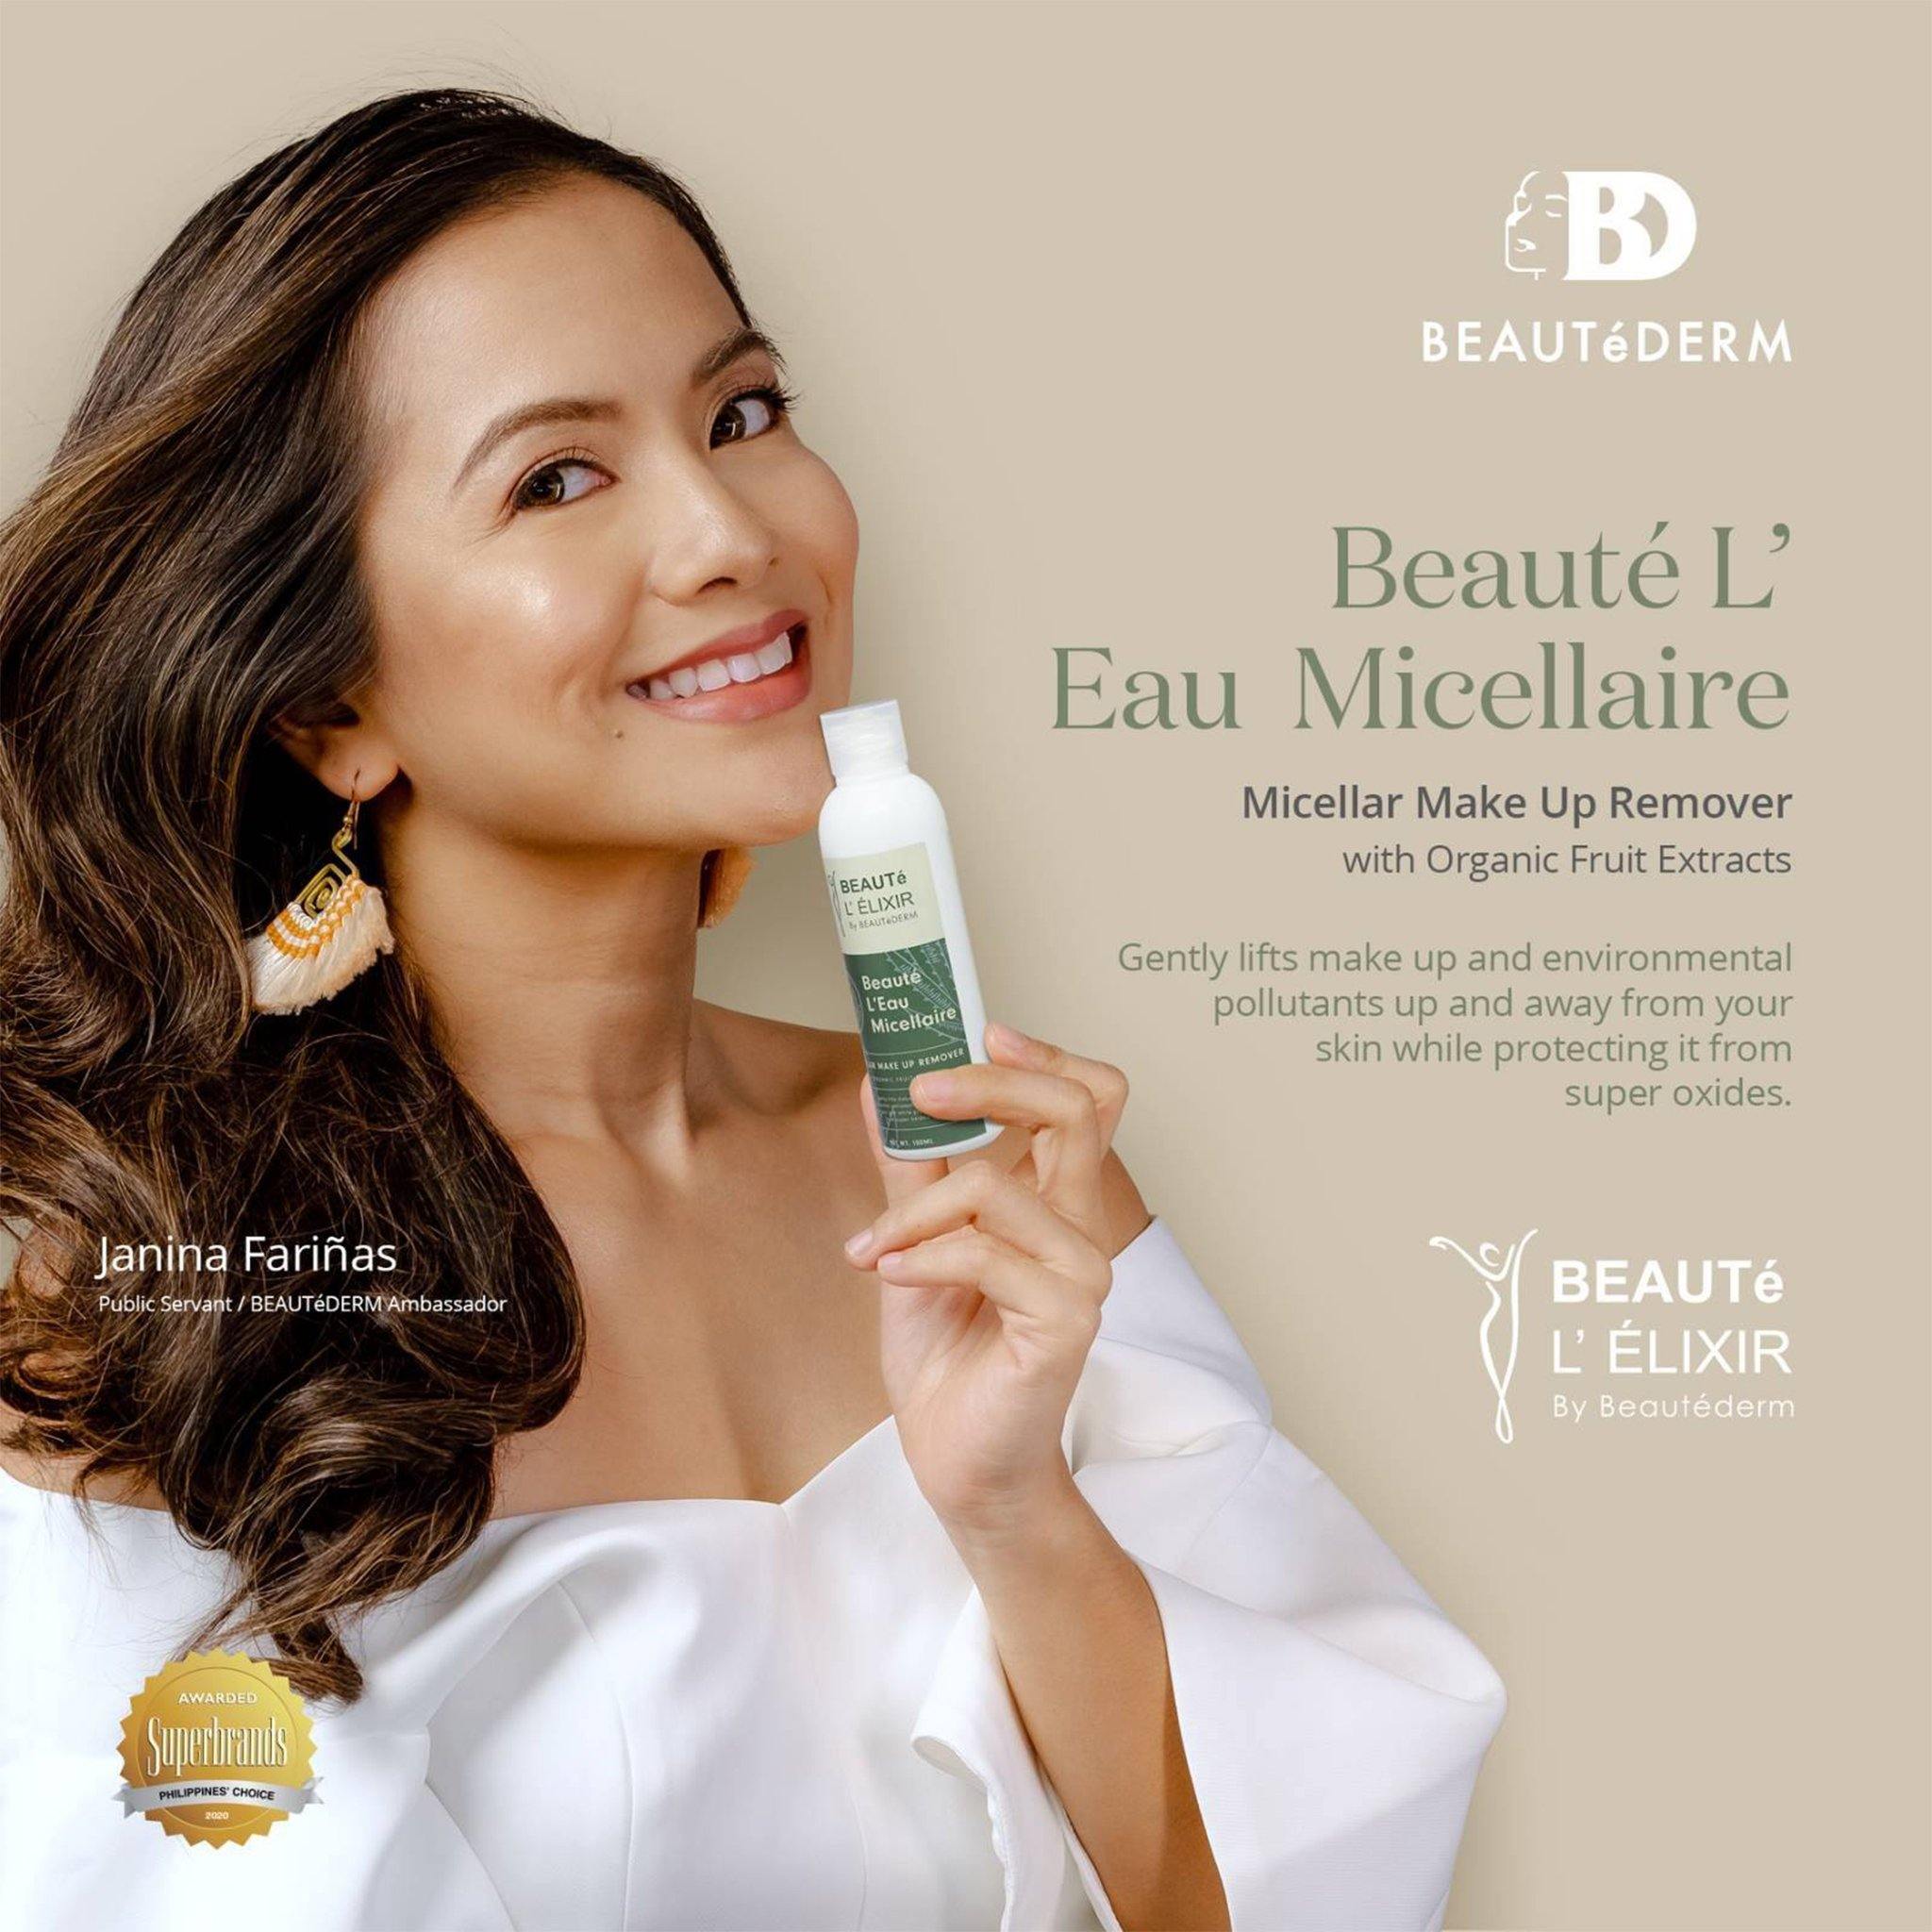 Beaute L’ Eau Micellaire Makeup Remover with Organic Fruit Extracts, Beaute L' Elixir by Beautederm, with Janina Fariñas (Beautederm Ambassador)